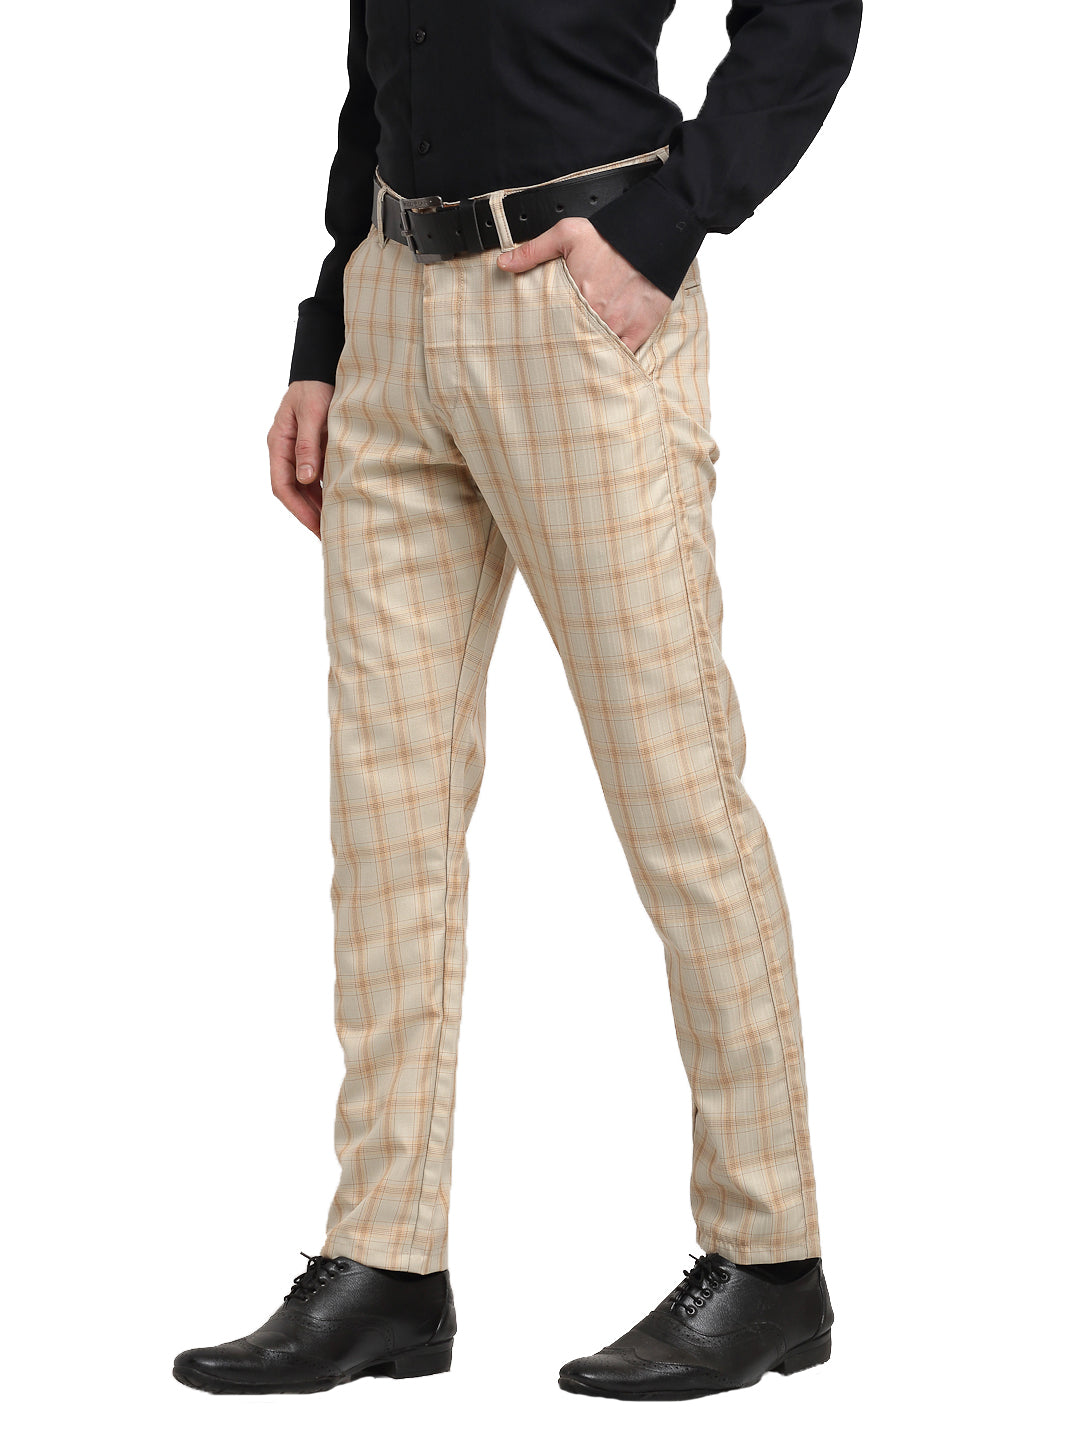 Buy Grey  Black Trousers  Pants for Men by Garcon Online  Ajiocom